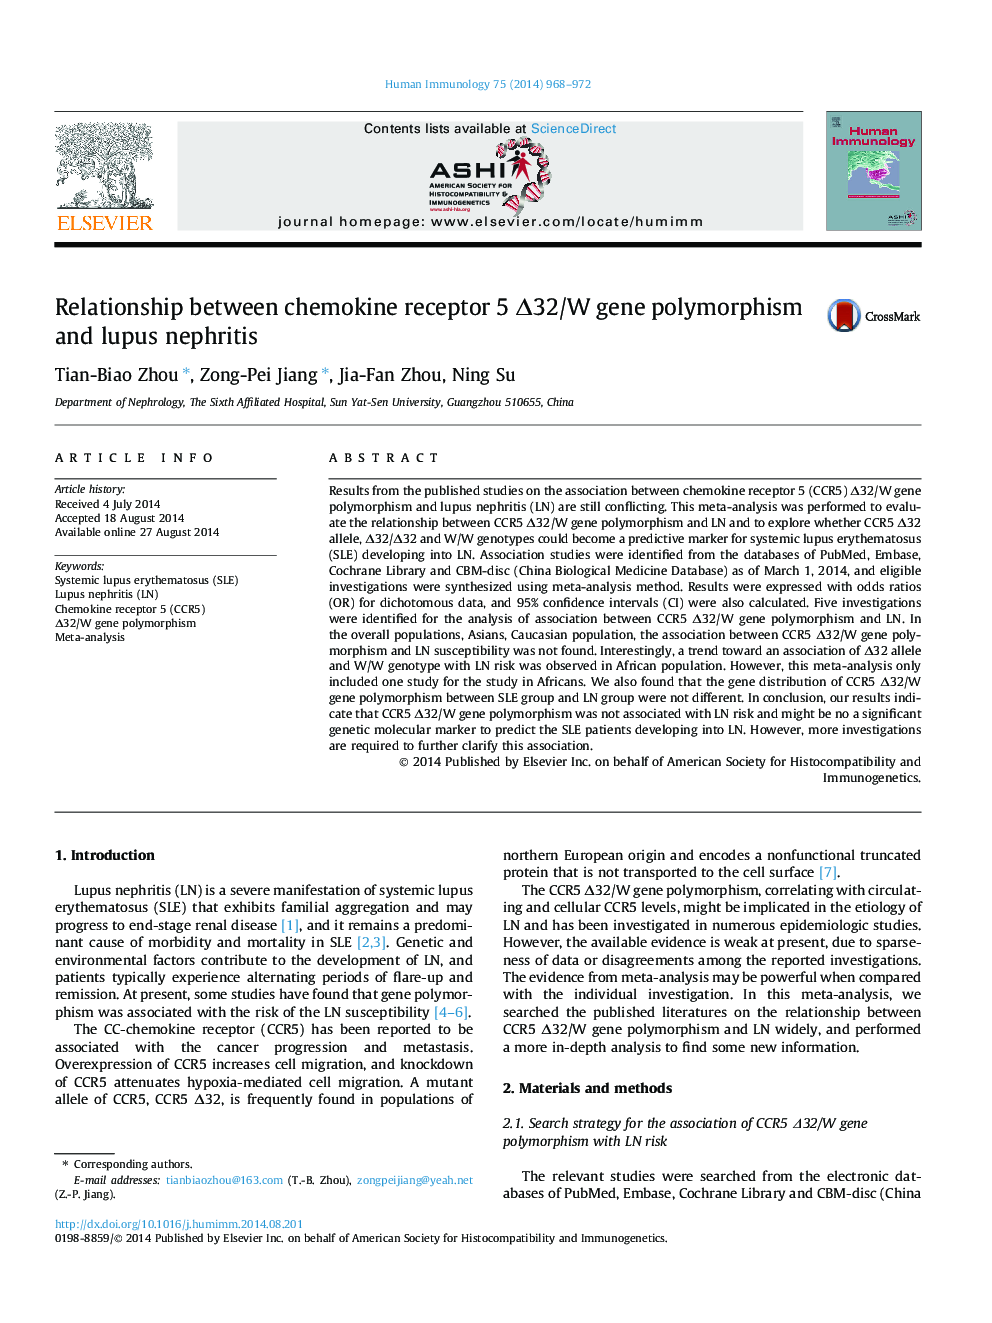 Relationship between chemokine receptor 5 Δ32/W gene polymorphism and lupus nephritis